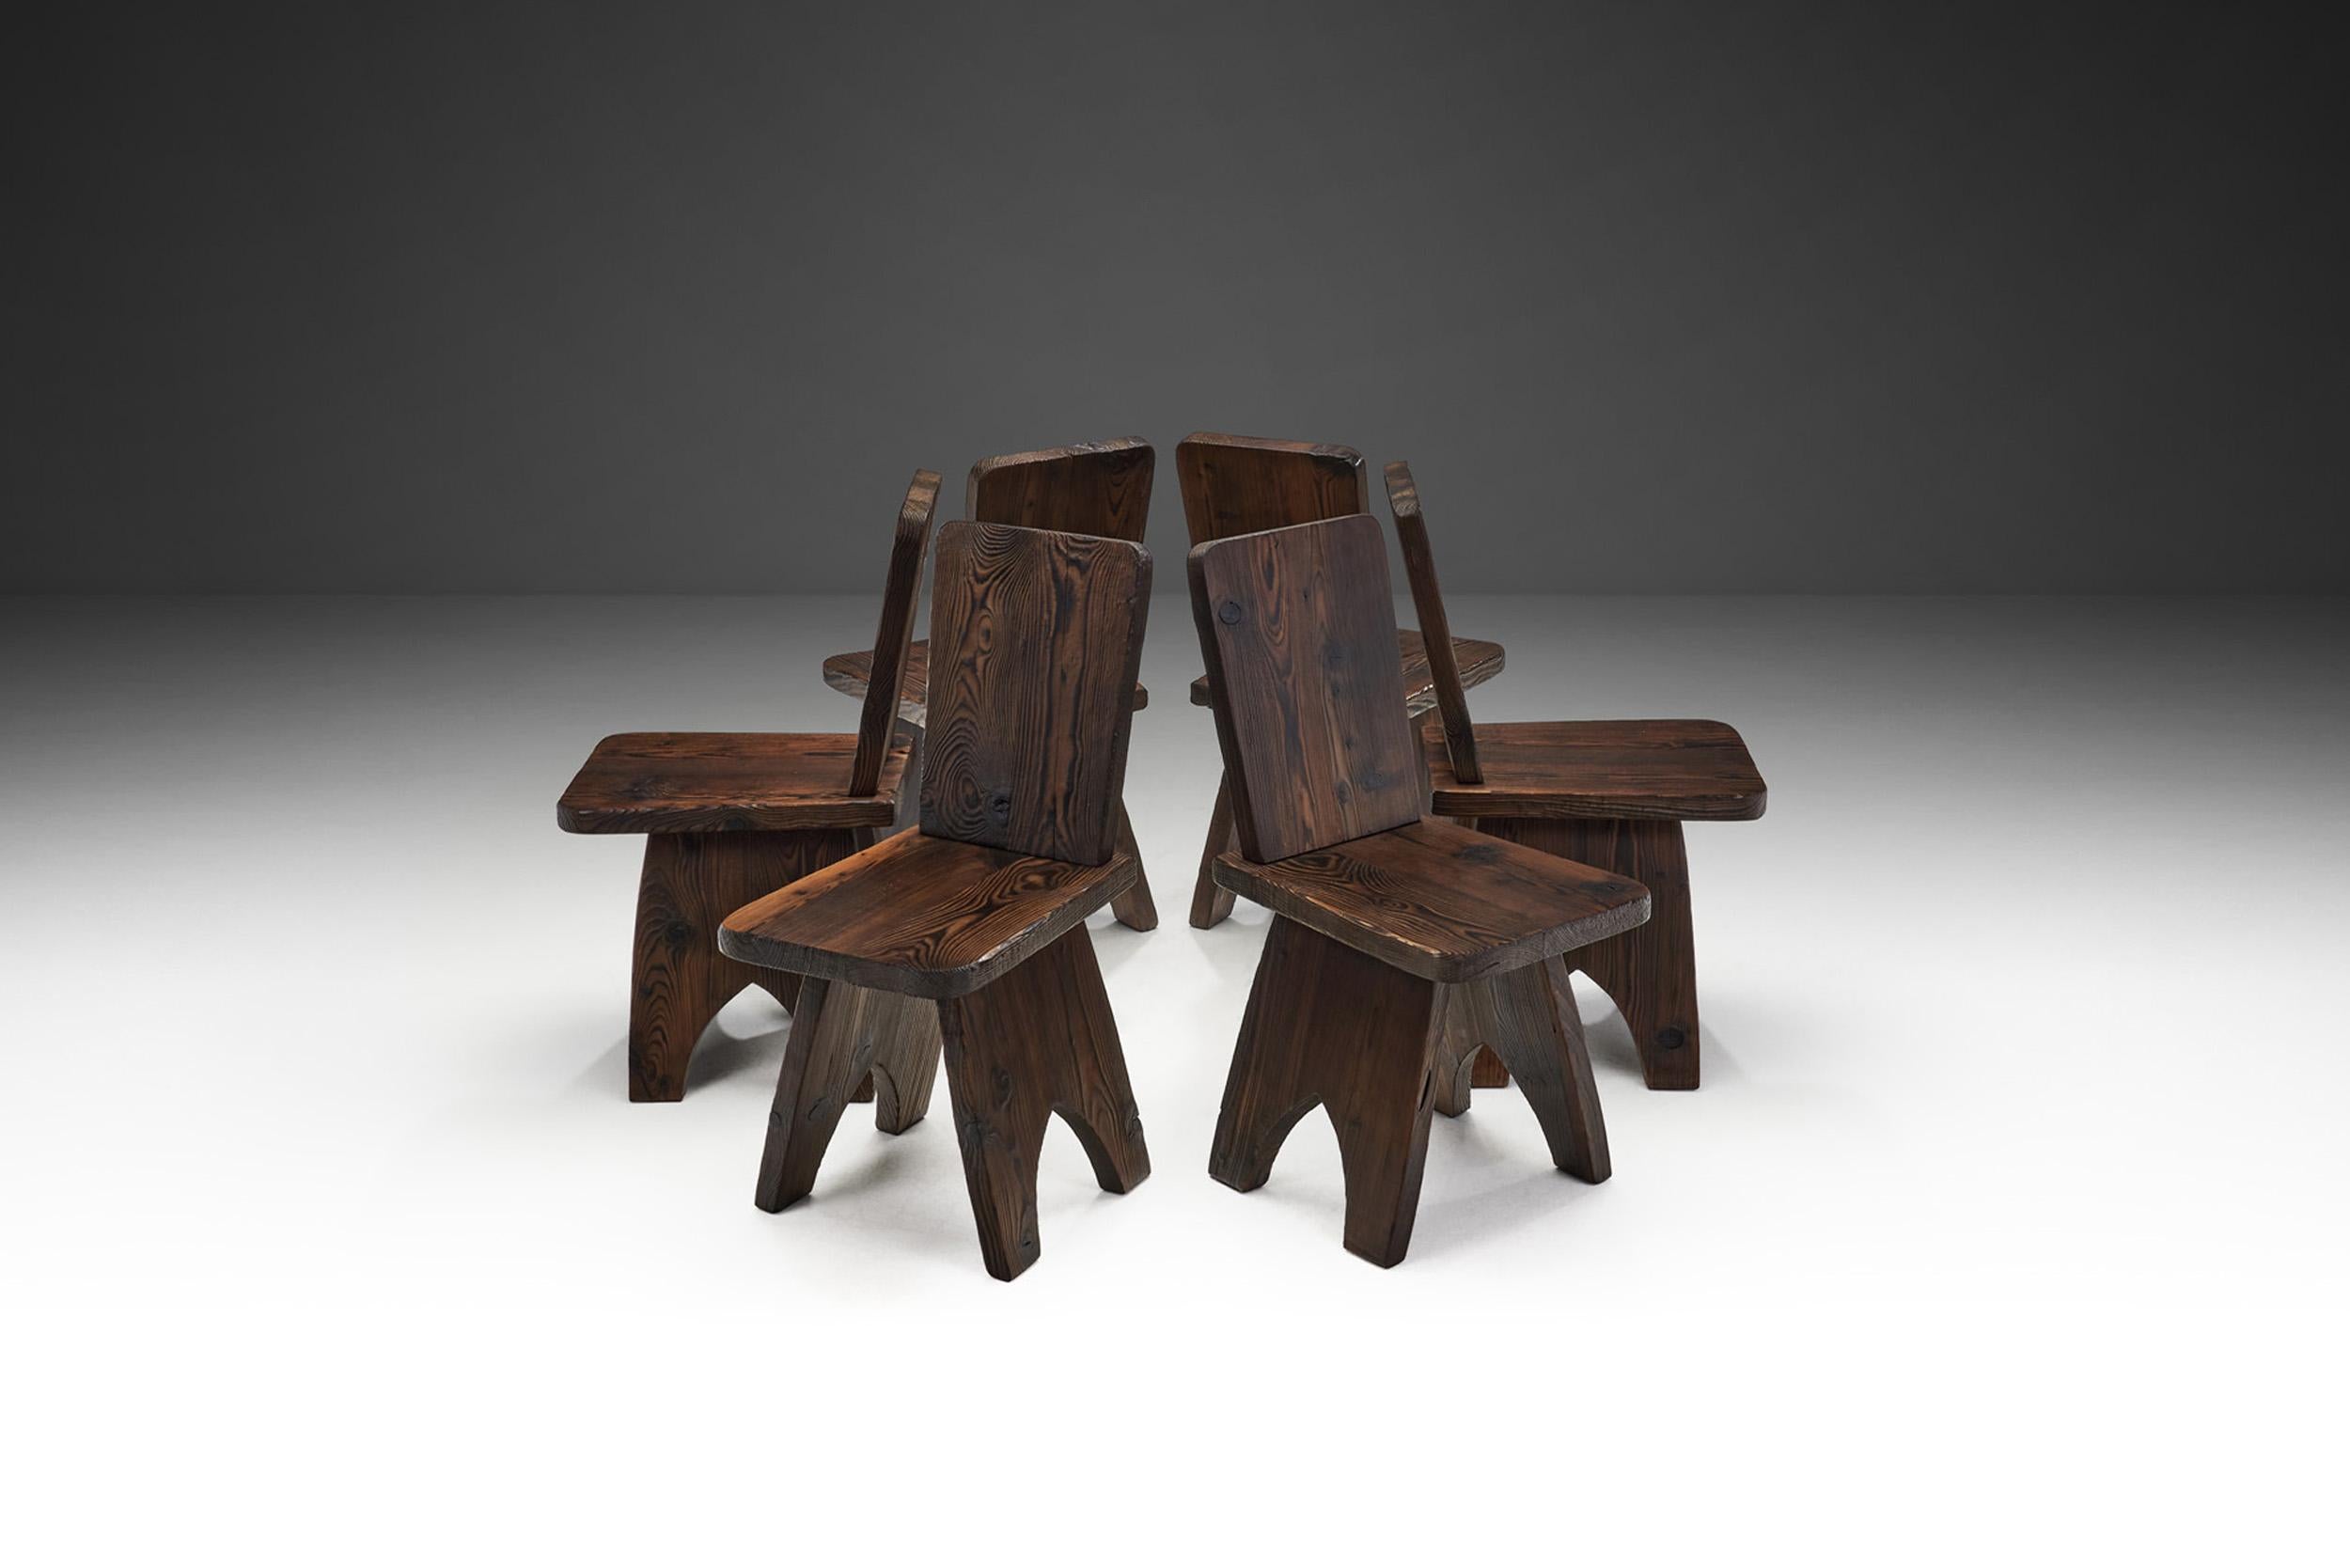 Mid-20th Century European Organic Wood Dining Chairs with Beautiful Grain, Europe, ca 1950s